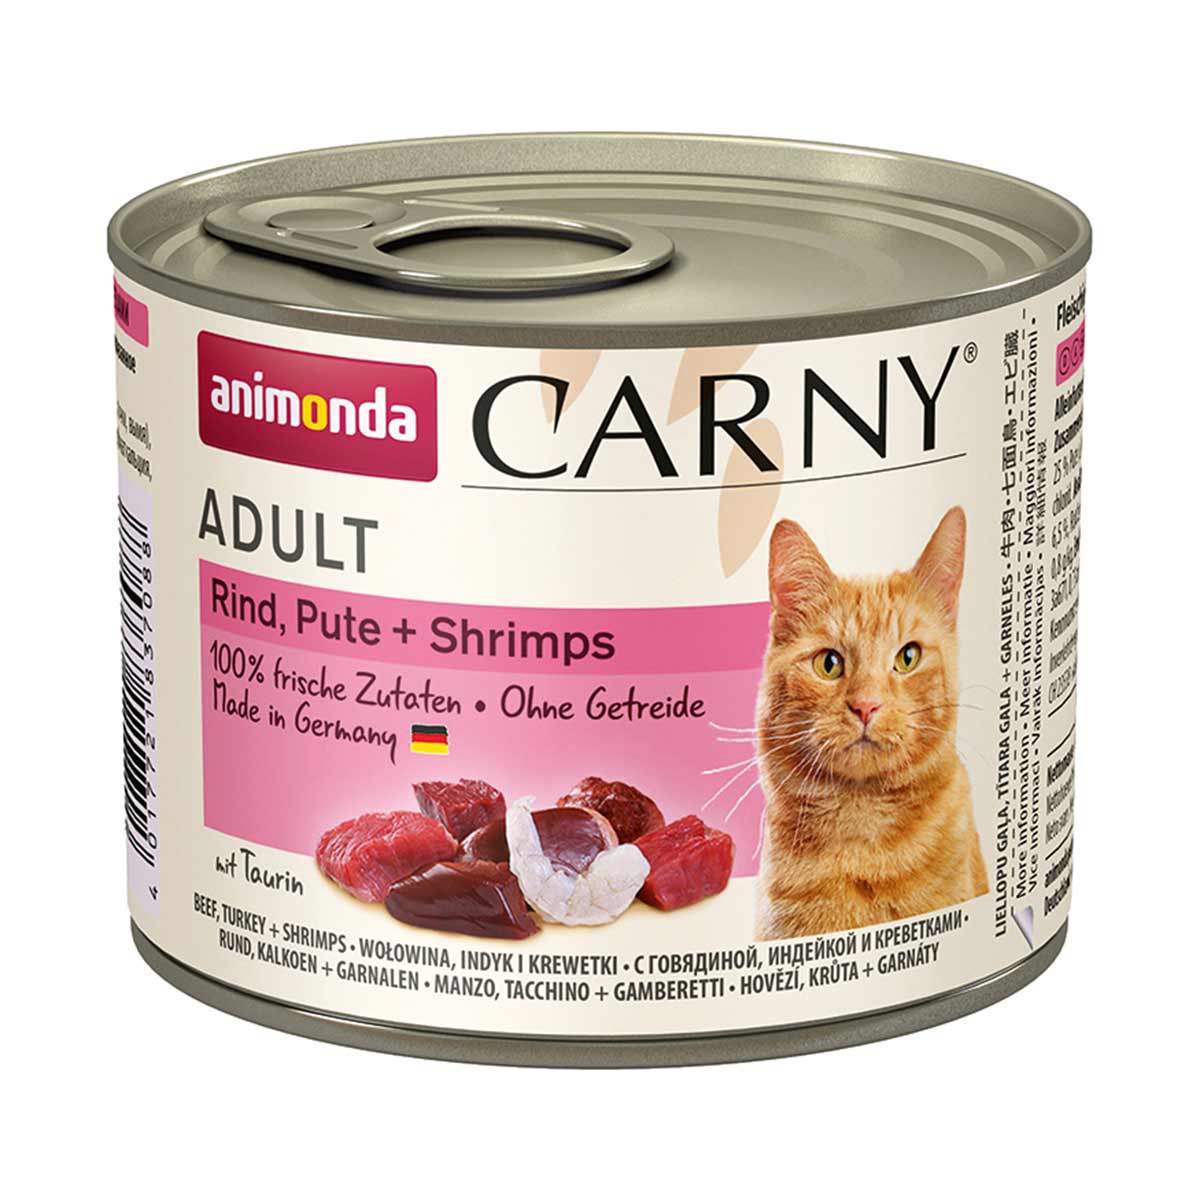 Animonda Katzen-Nassfutter Carny Adult Rind, Pute & Shrimps 24x200g von Animonda